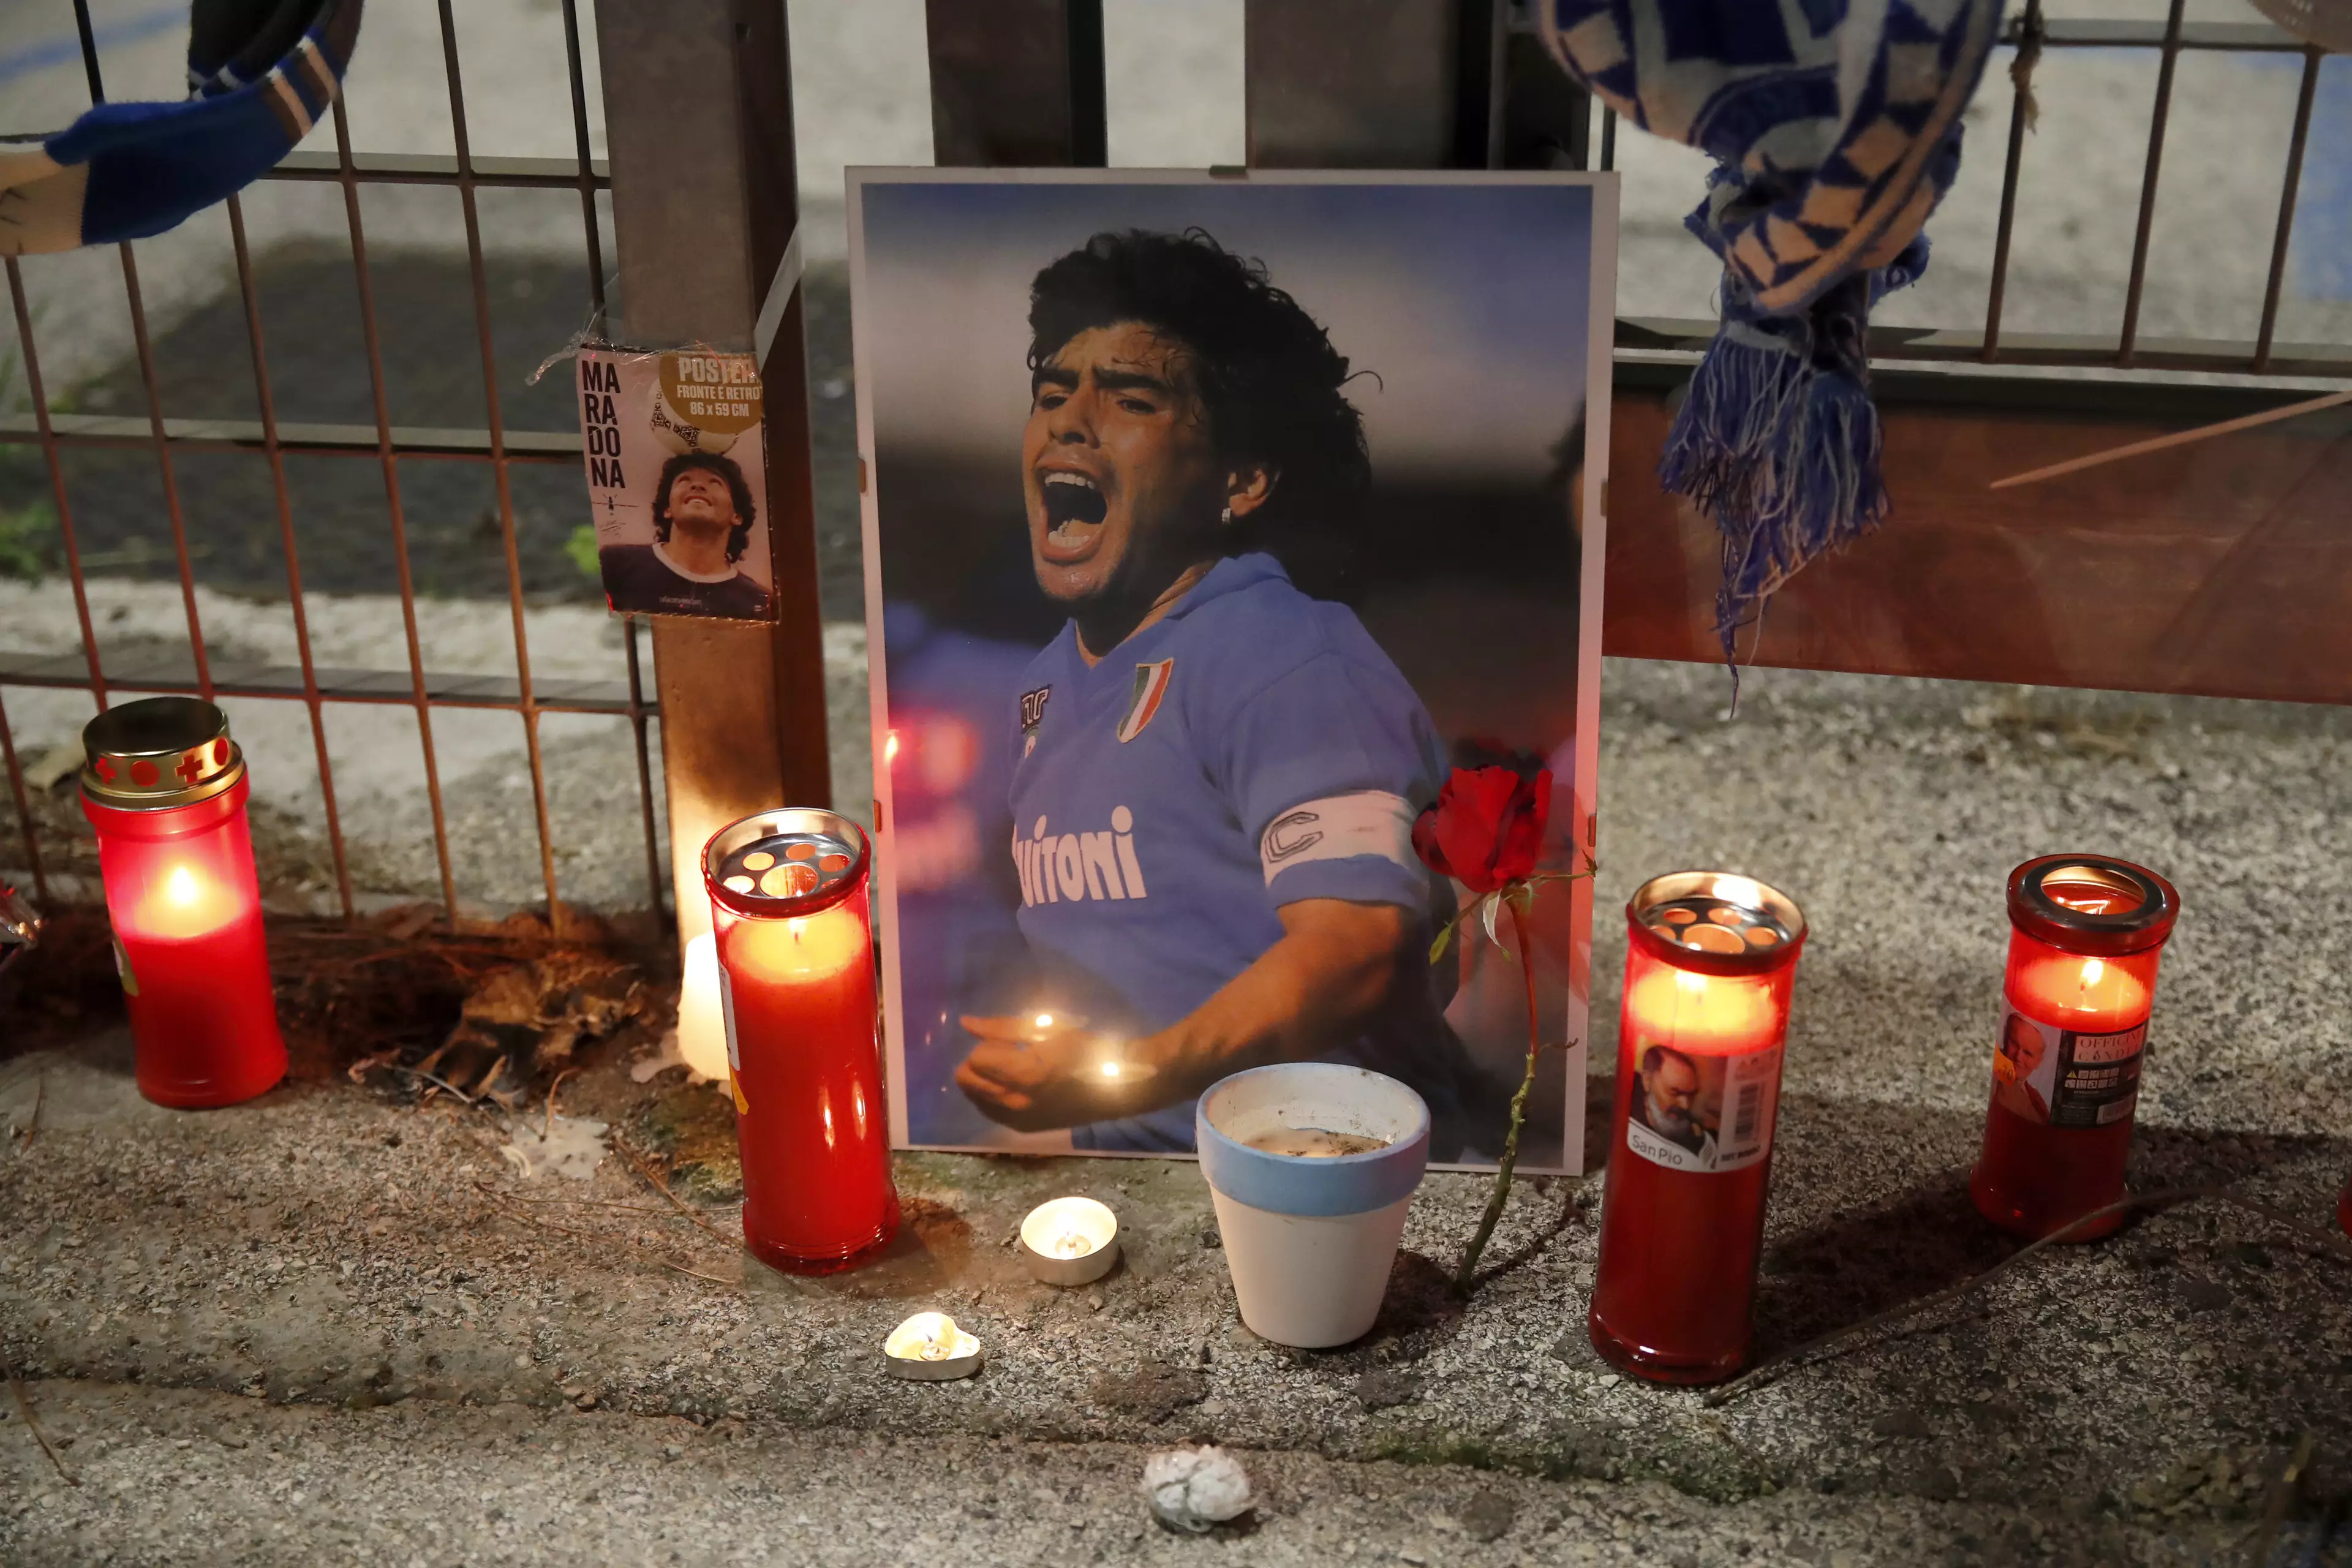 Napoli fans have paid tribute to Maradona outside the club's stadium.